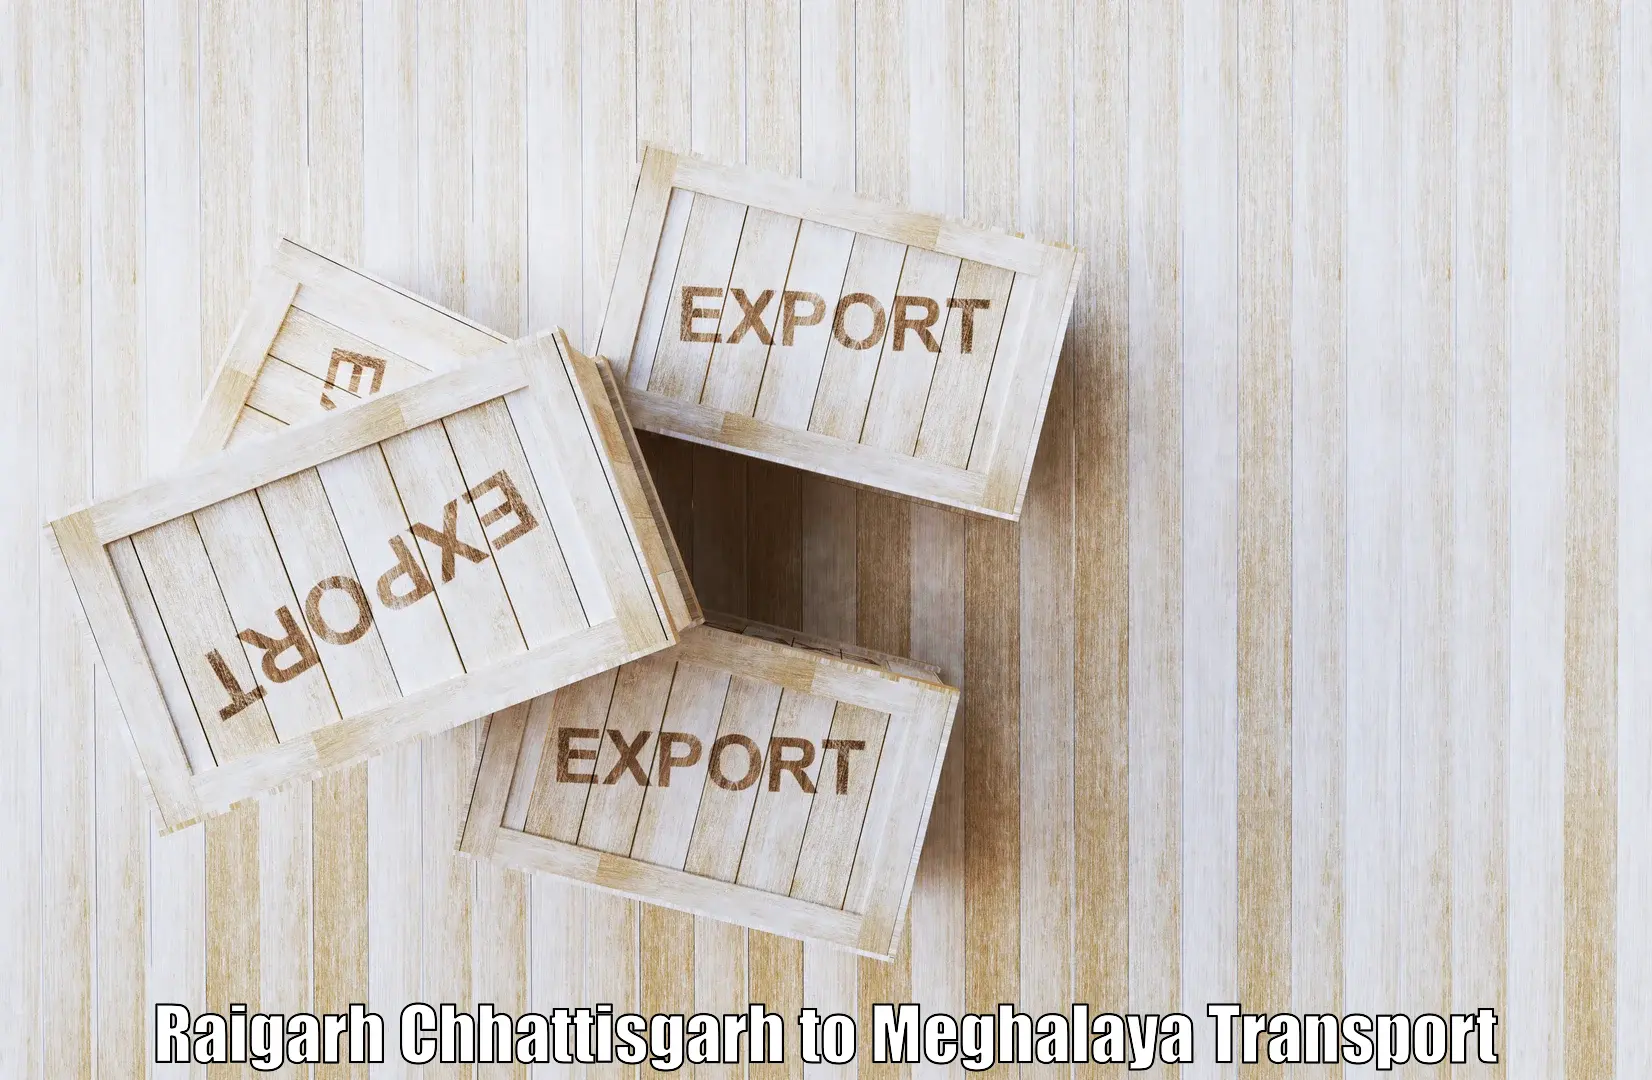 Shipping partner Raigarh Chhattisgarh to Shillong